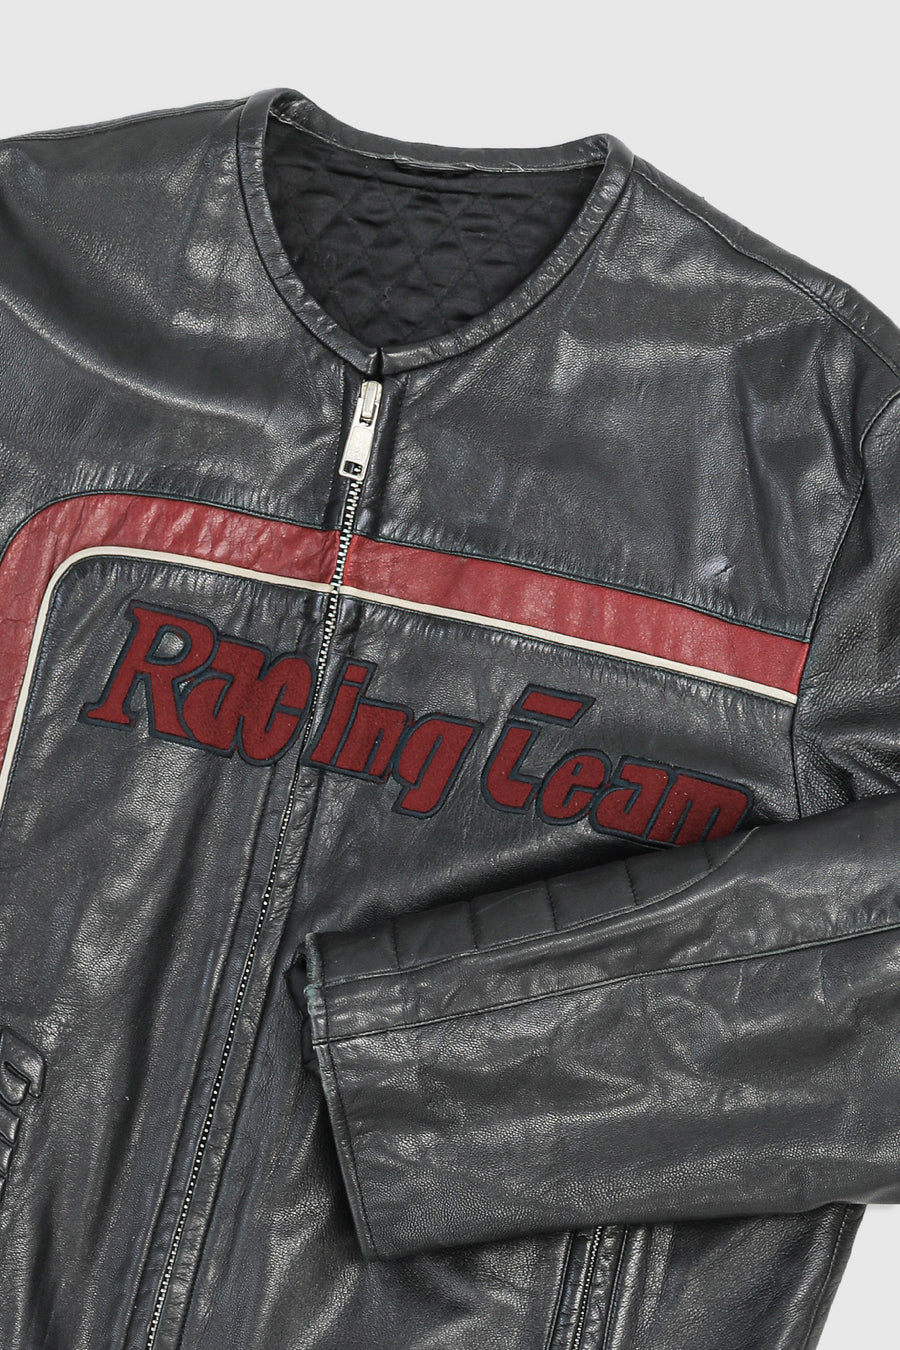 Vintage Racing Leather Jacket - M